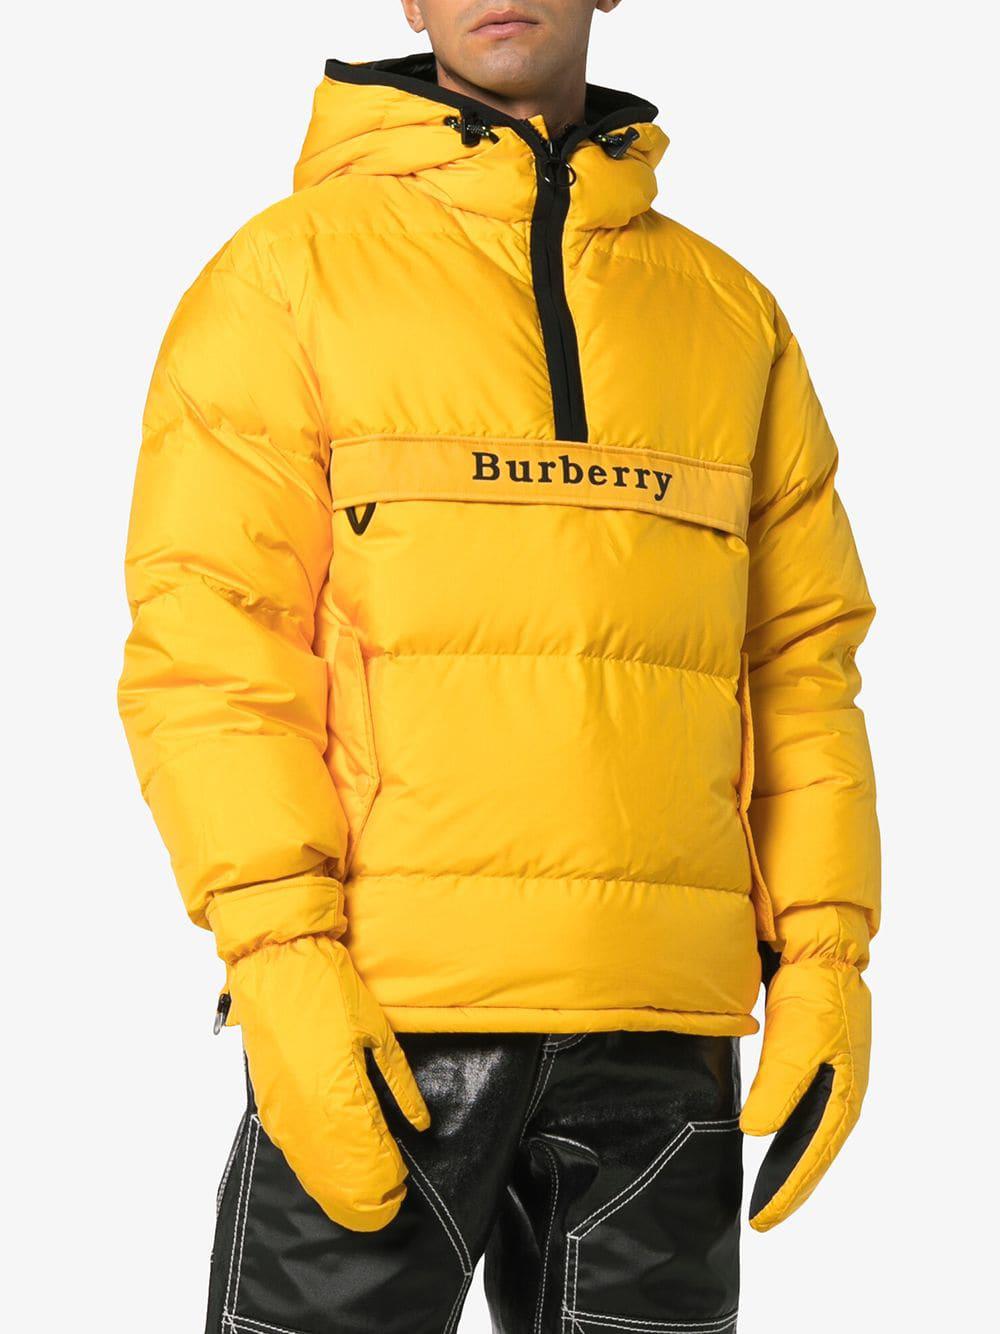 burberry yellow puffer jacket